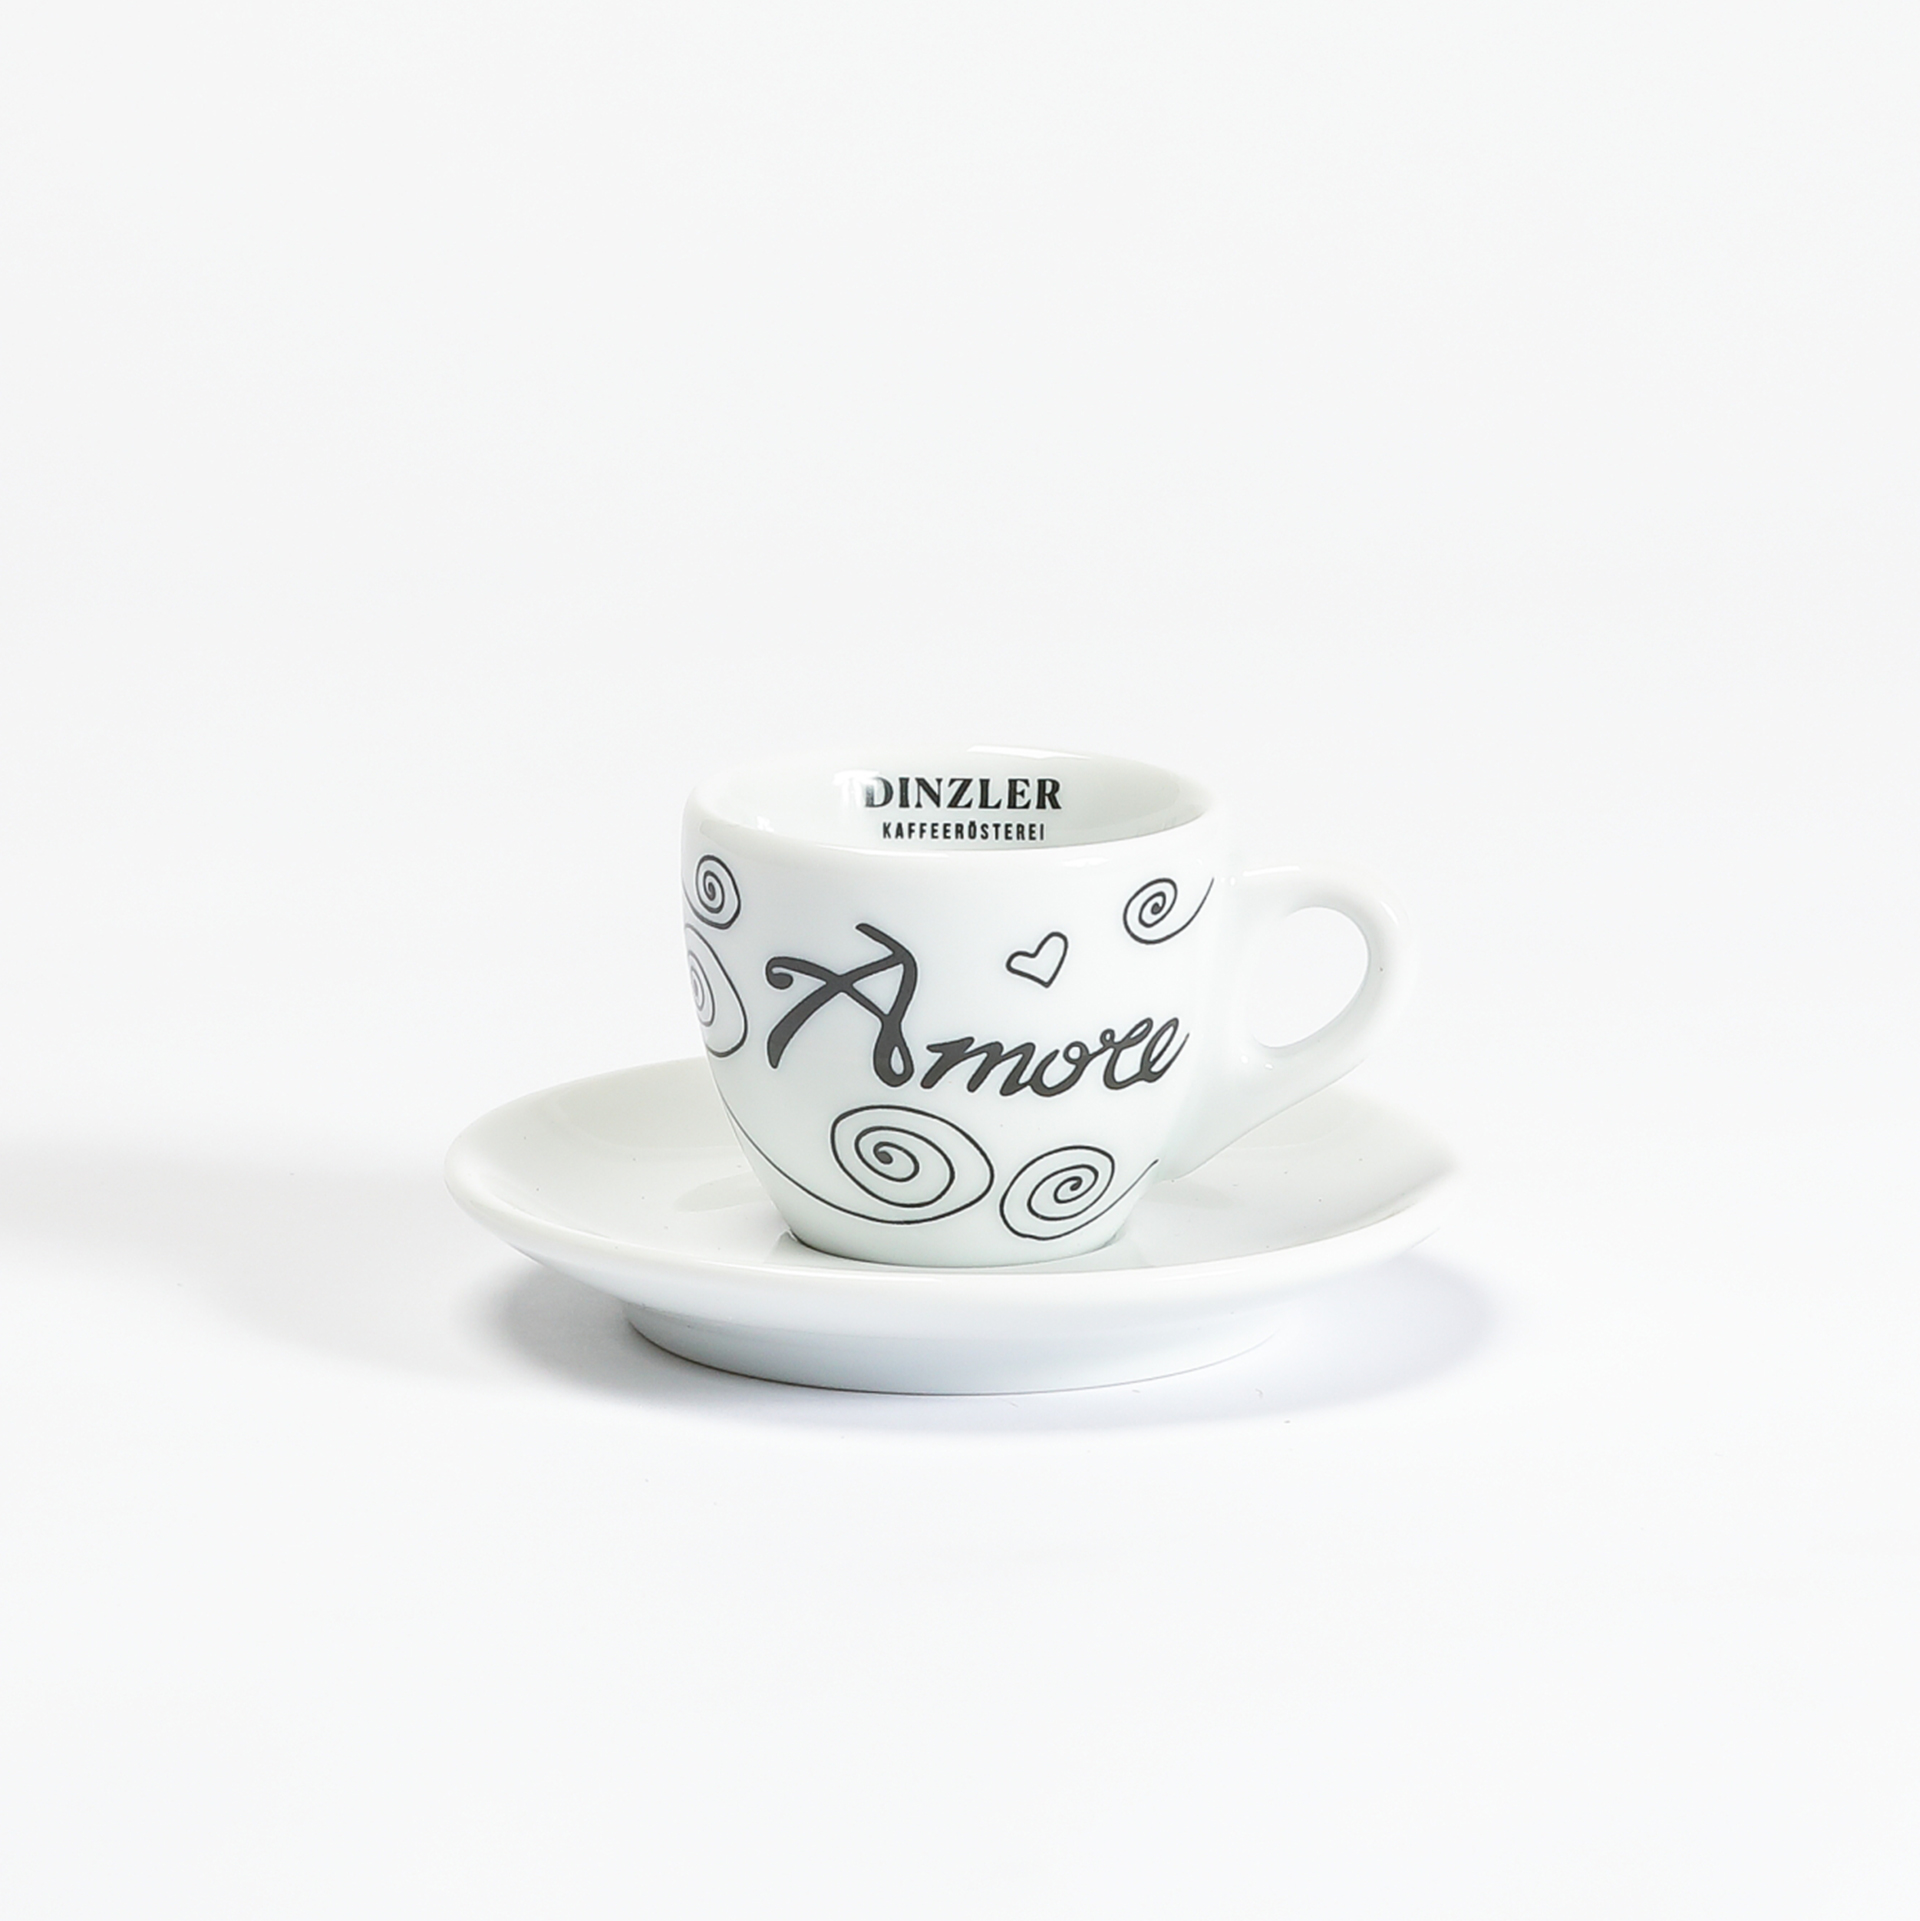 Produktbild DINZLER Espressotasse Sonderedition „Amore“| DINZLER Kaffeerösterei